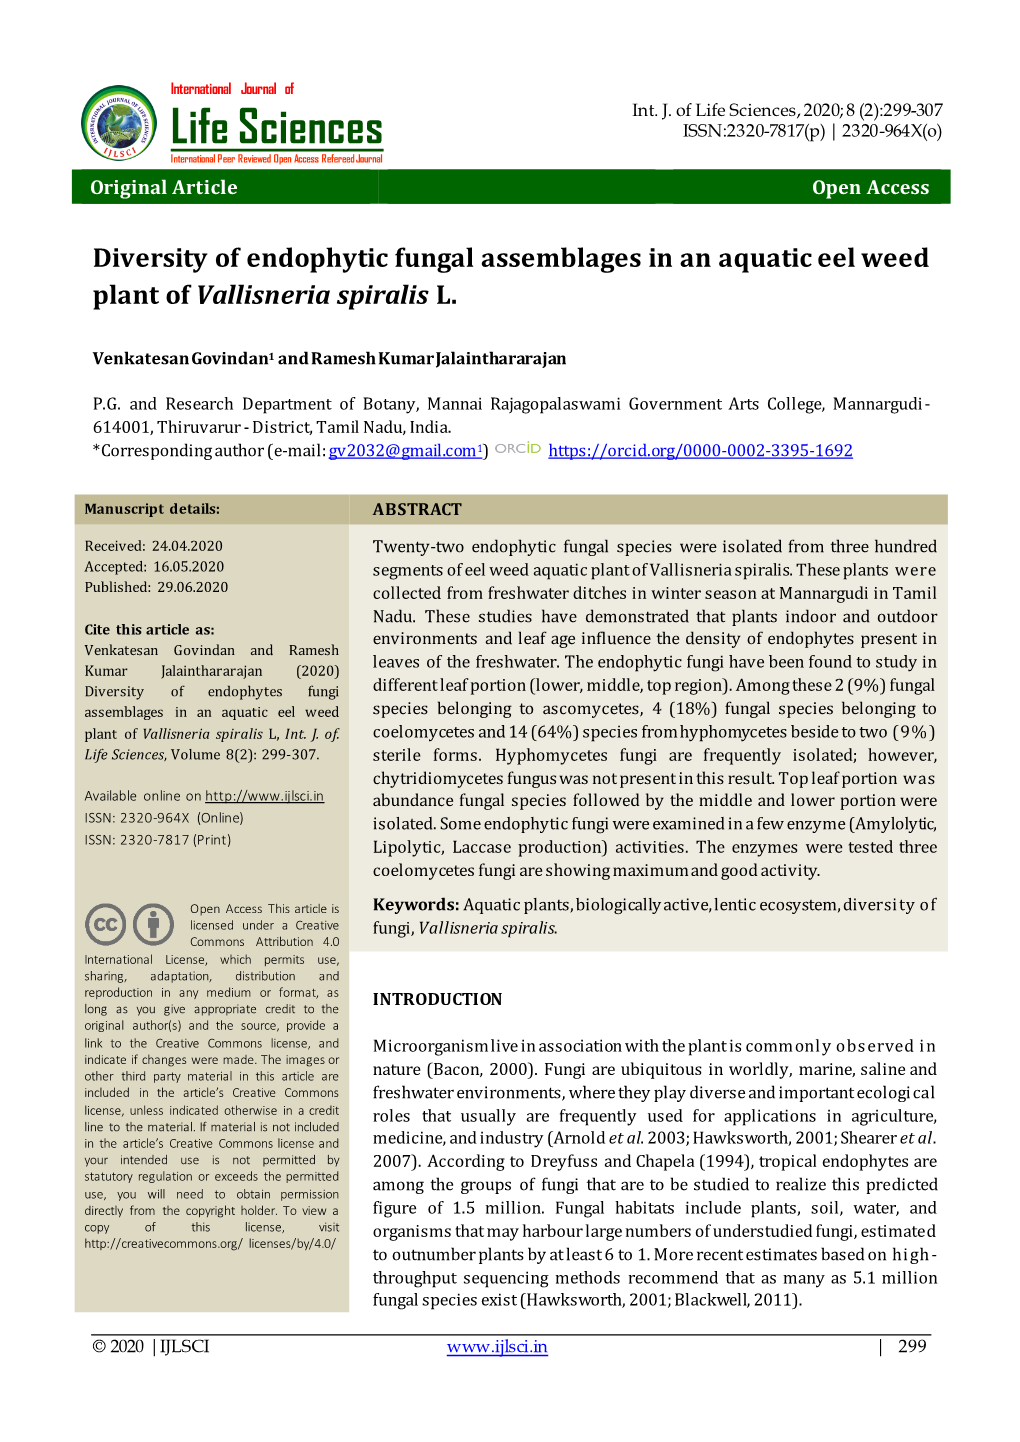 Diversity of Endophytic Fungal Assemblages in an Aquatic Eel Weed Plant of Vallisneria Spiralis L